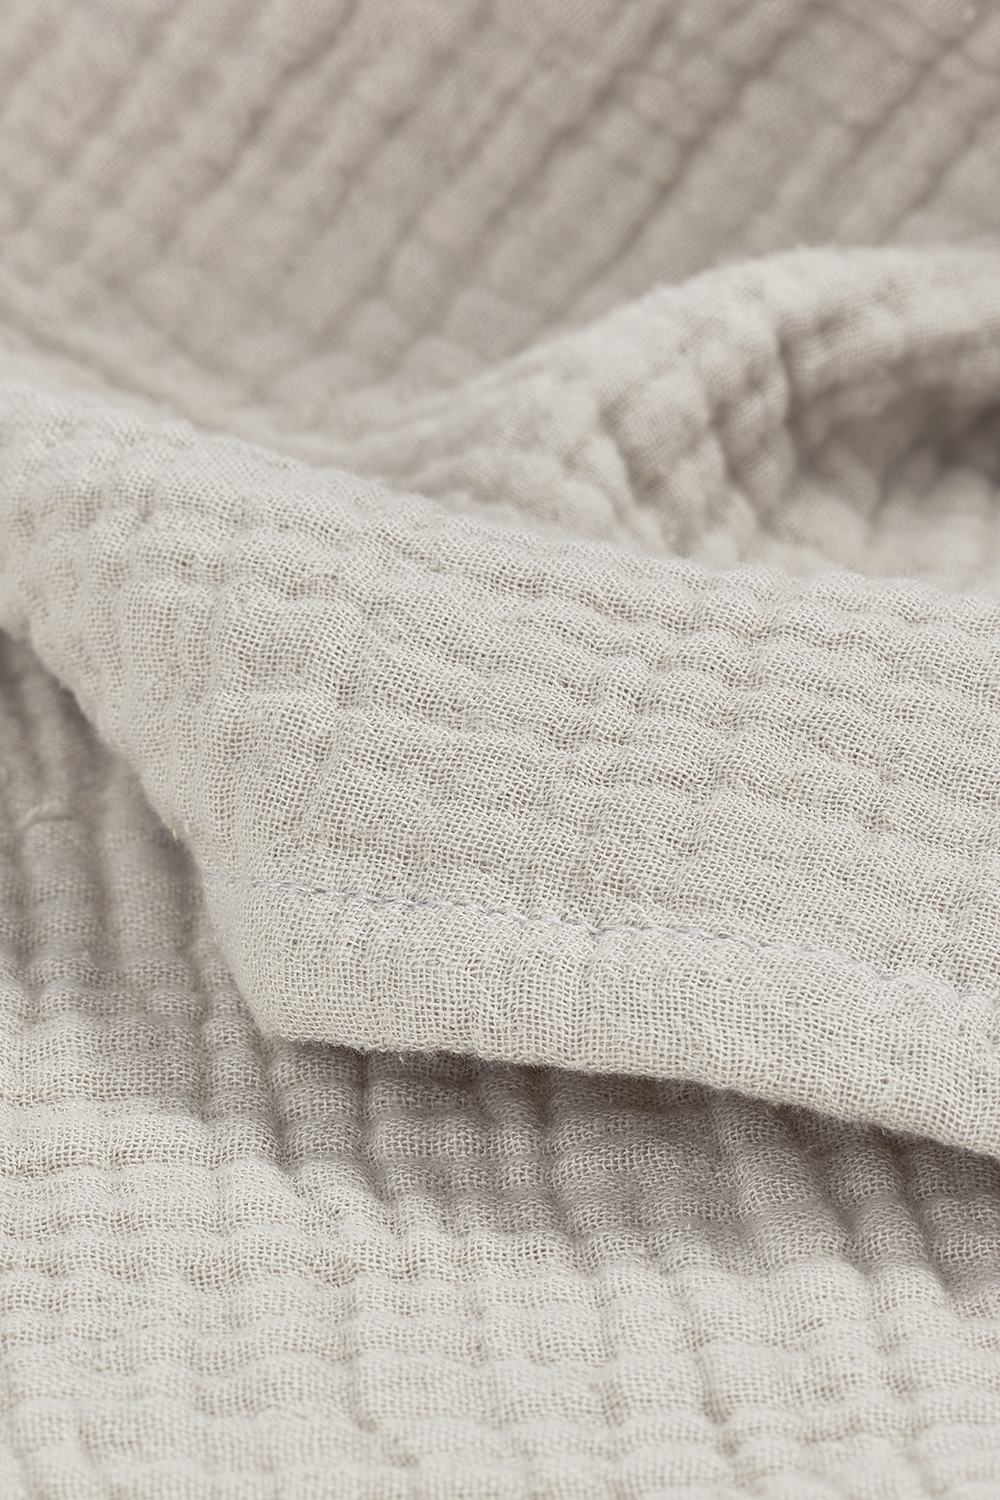 Cot bed sheet pre-washed muslin Uni - greige - 100x150cm